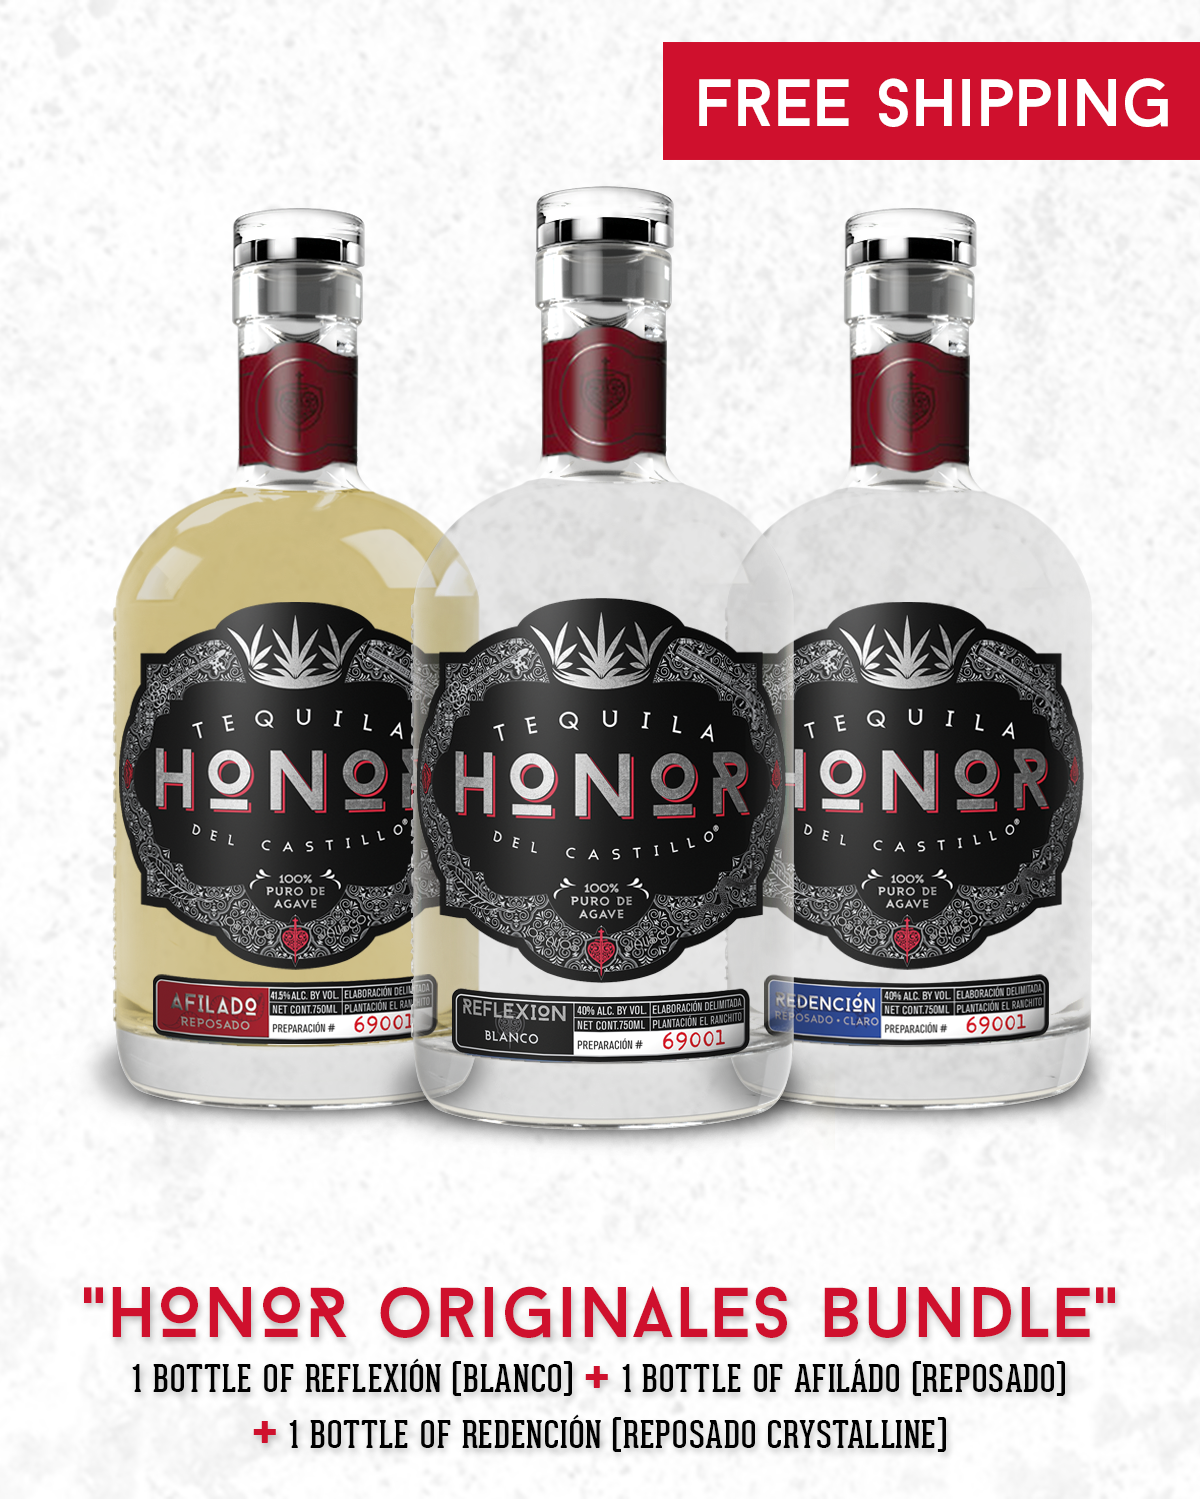 Paquete Honor Originales / Honor Originals Bundle